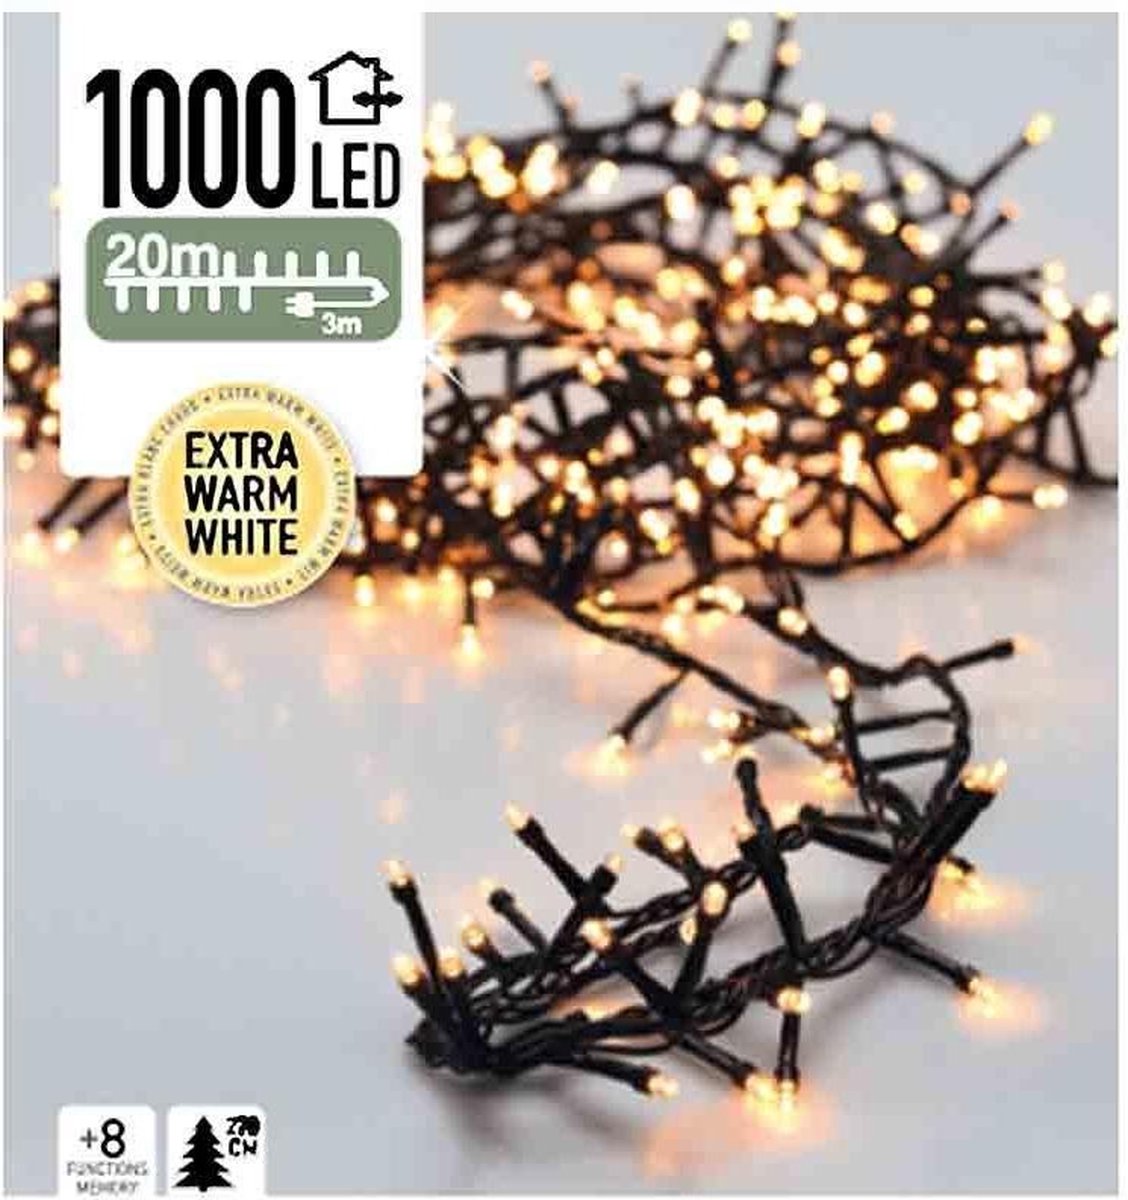 Nampook Kerstboomverlichting - 20 m - 1000 extra warm witte LEDs - Merkloos